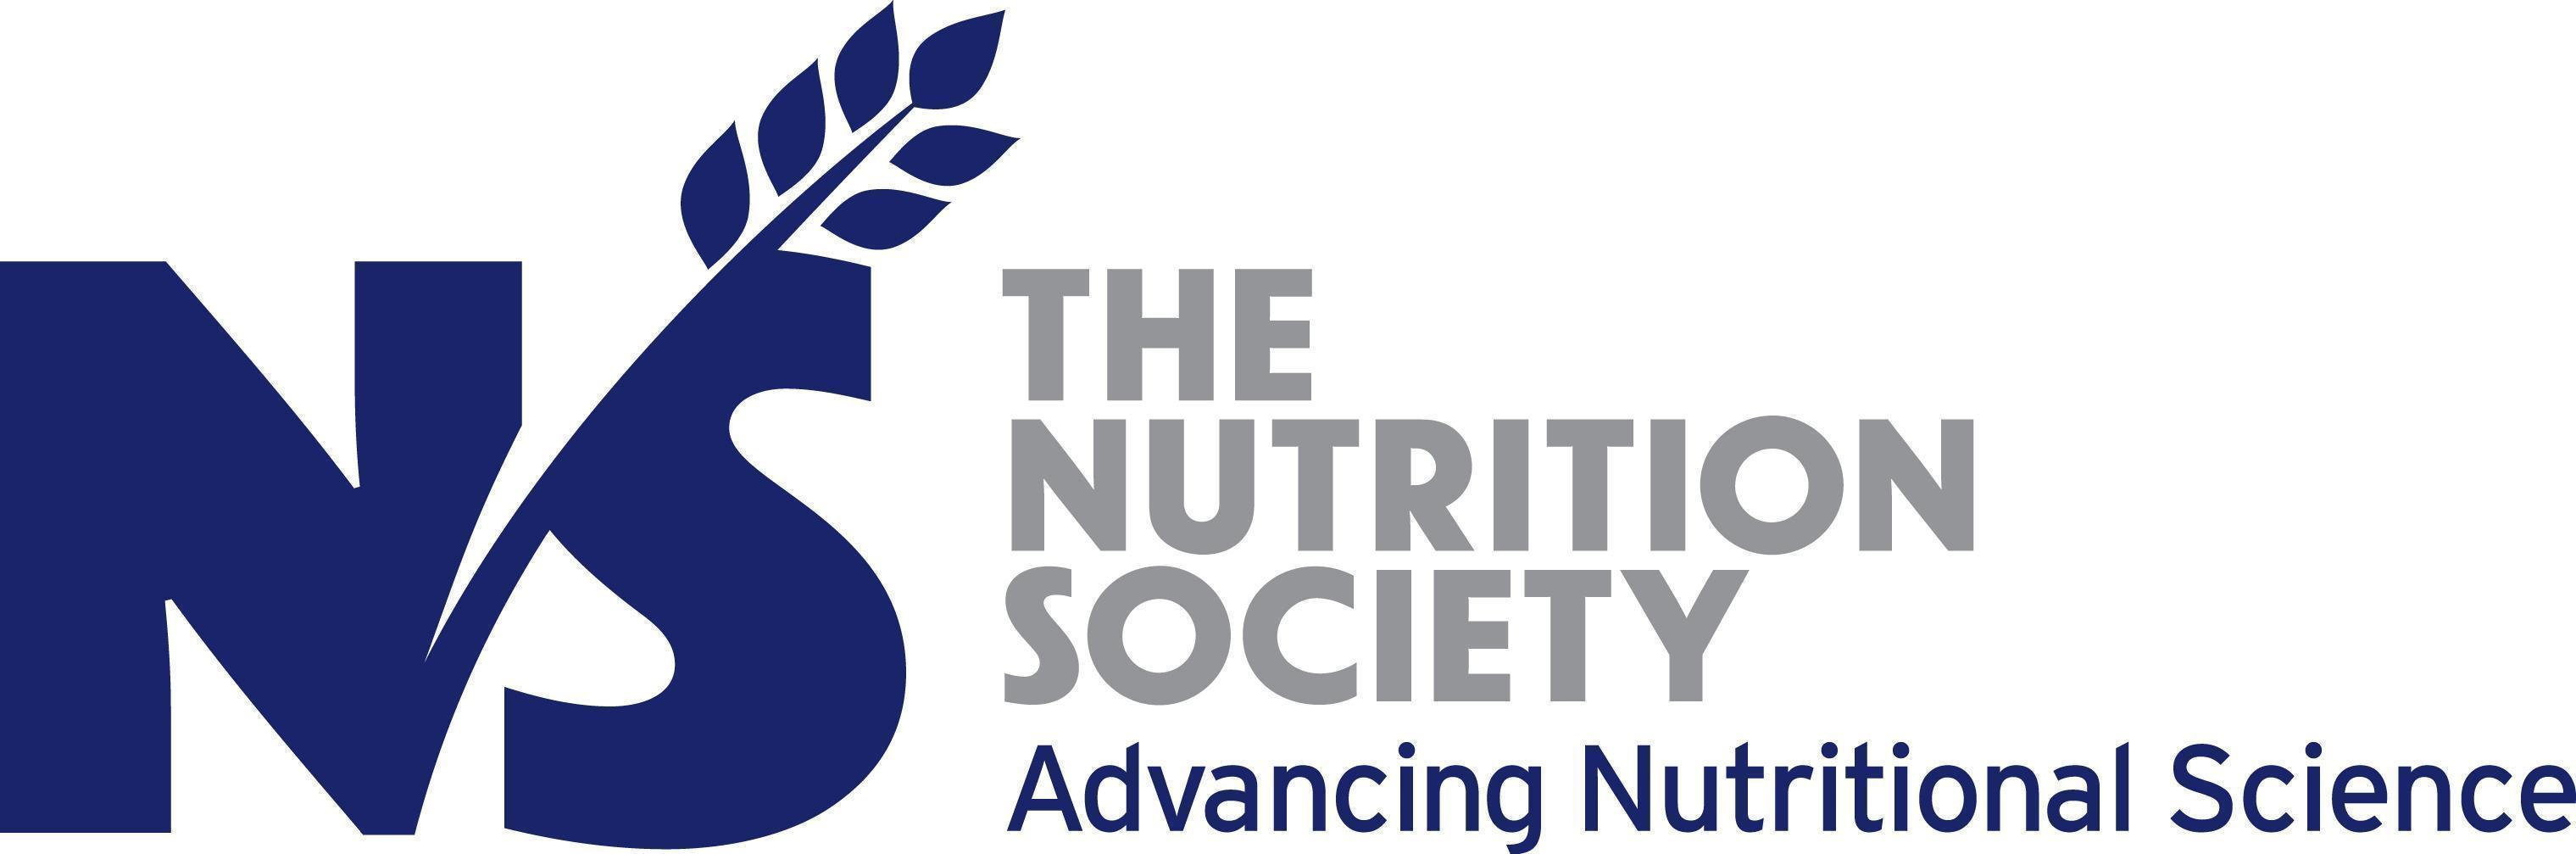 Nutrition society full colour logo